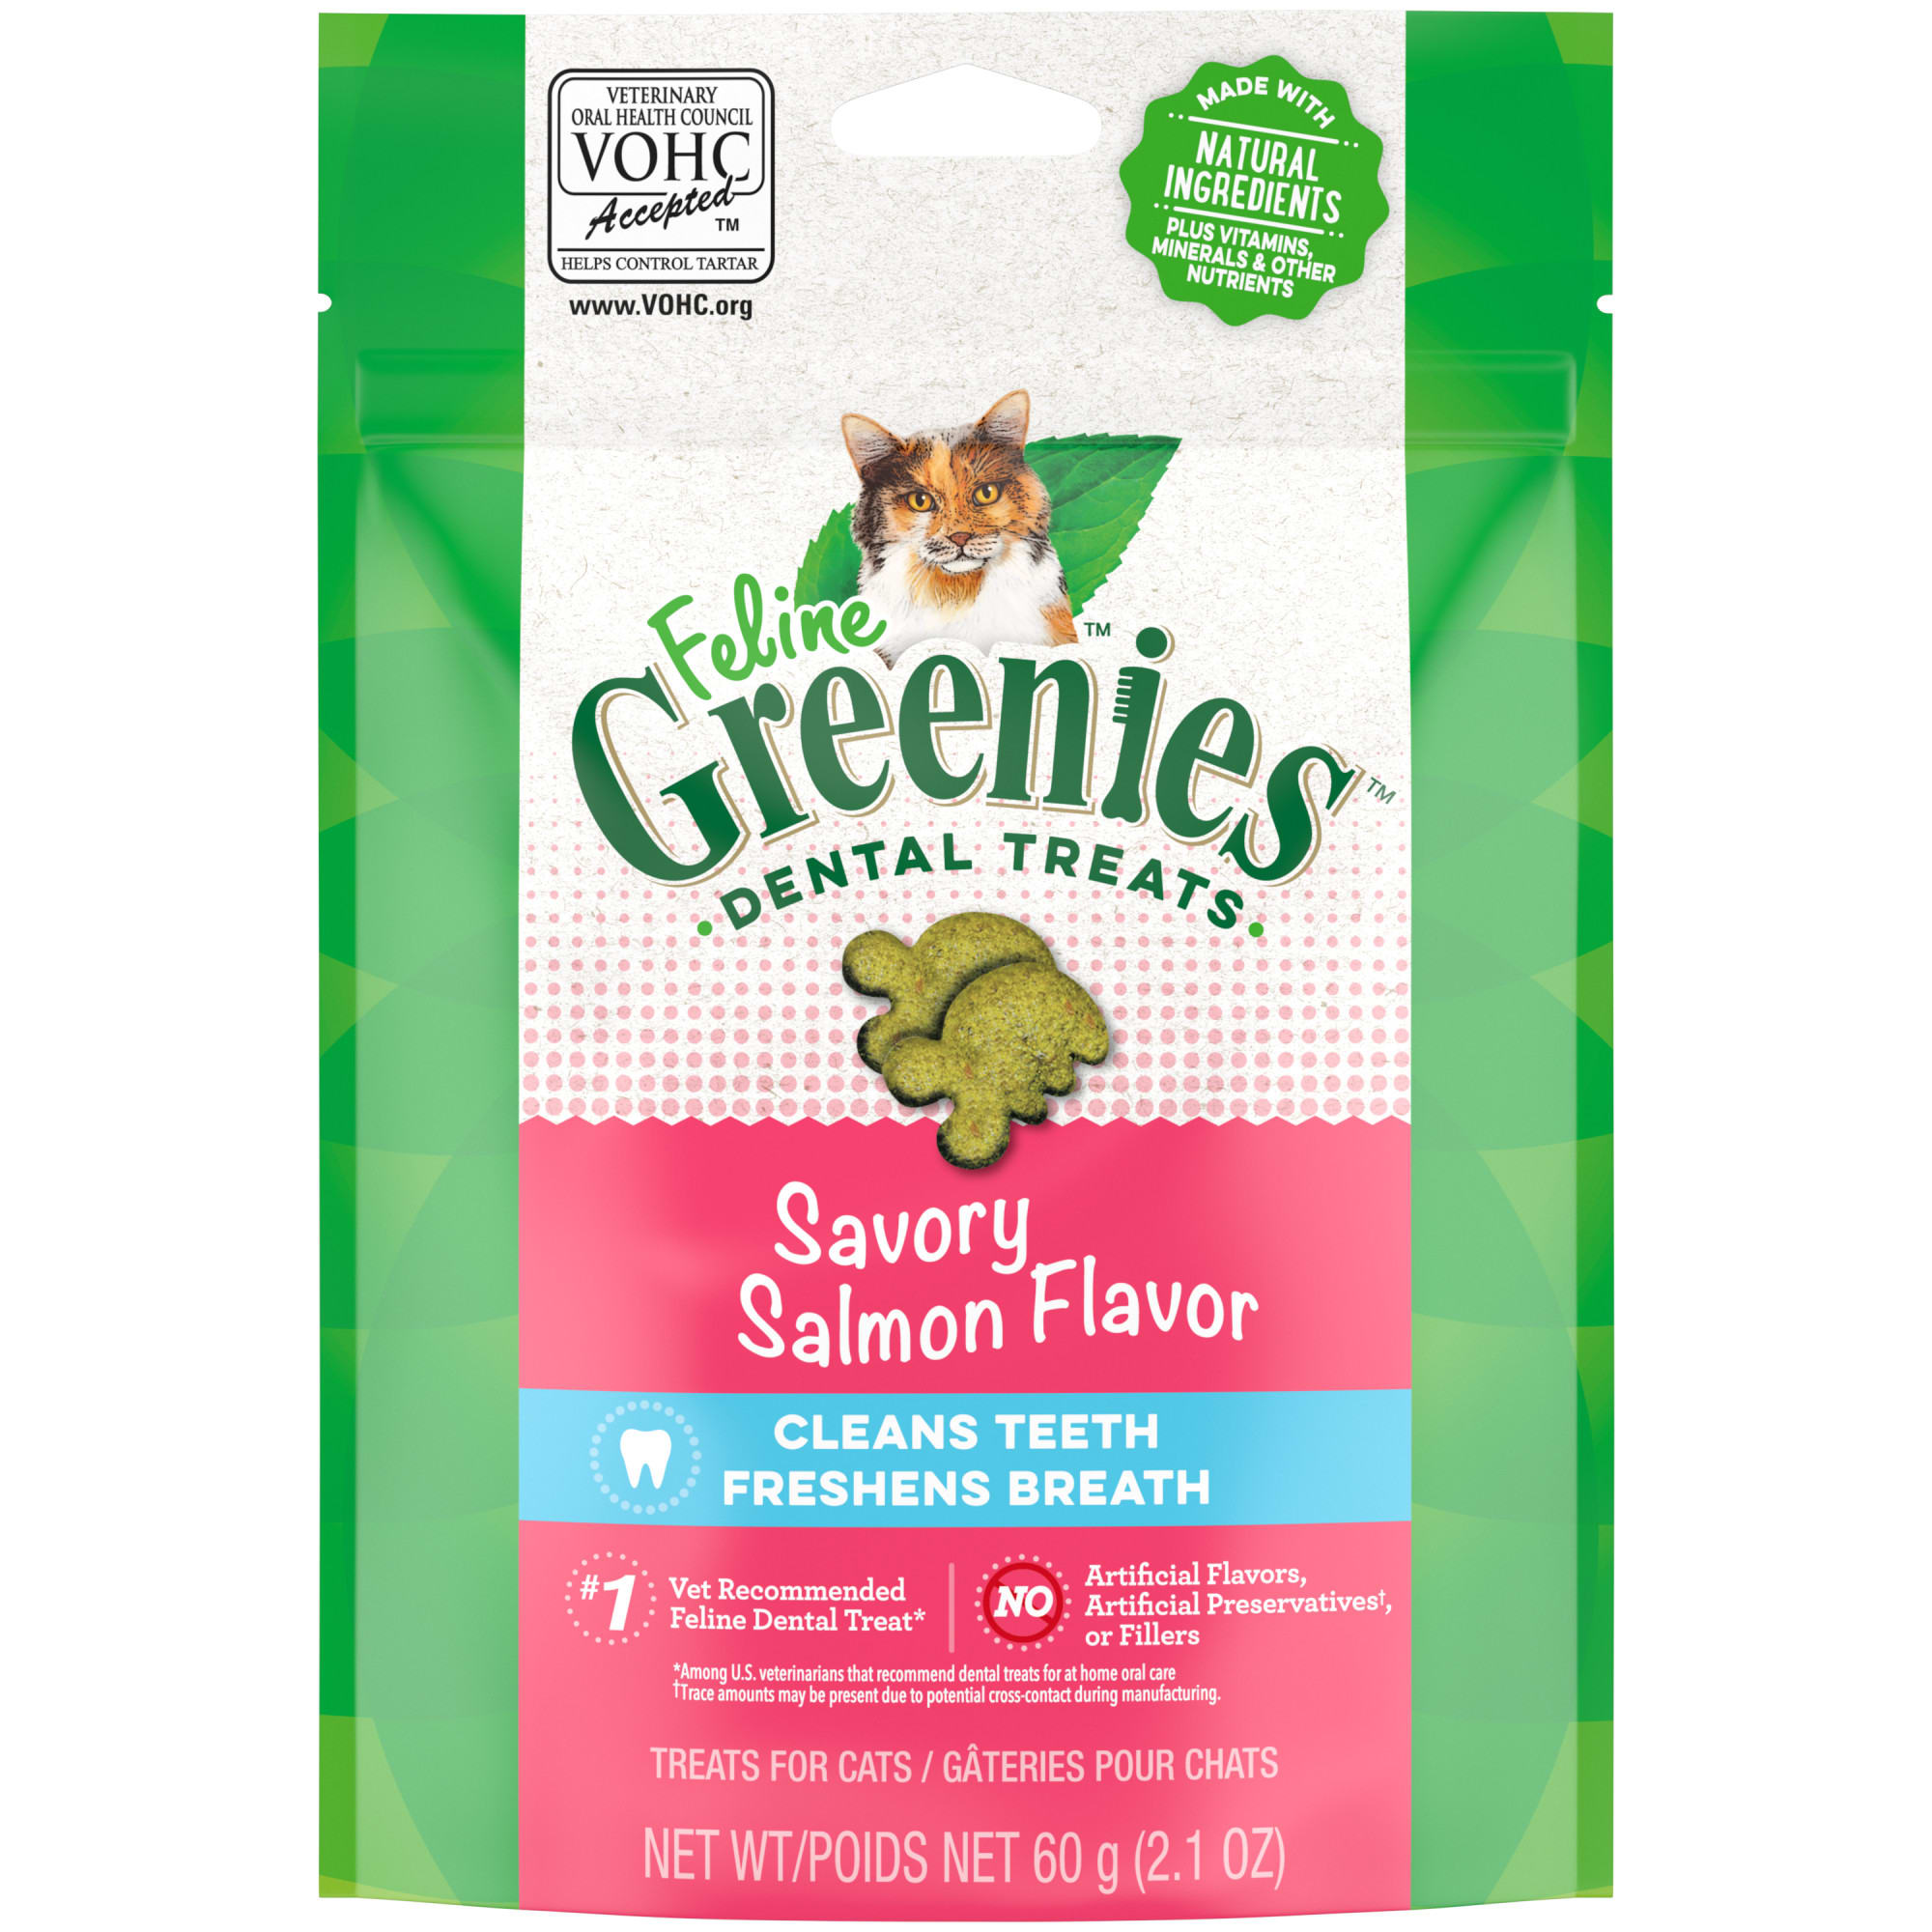 Feline Greenies Savory Salmon Flavor Adult Dental Cat Treats, 2.1 oz